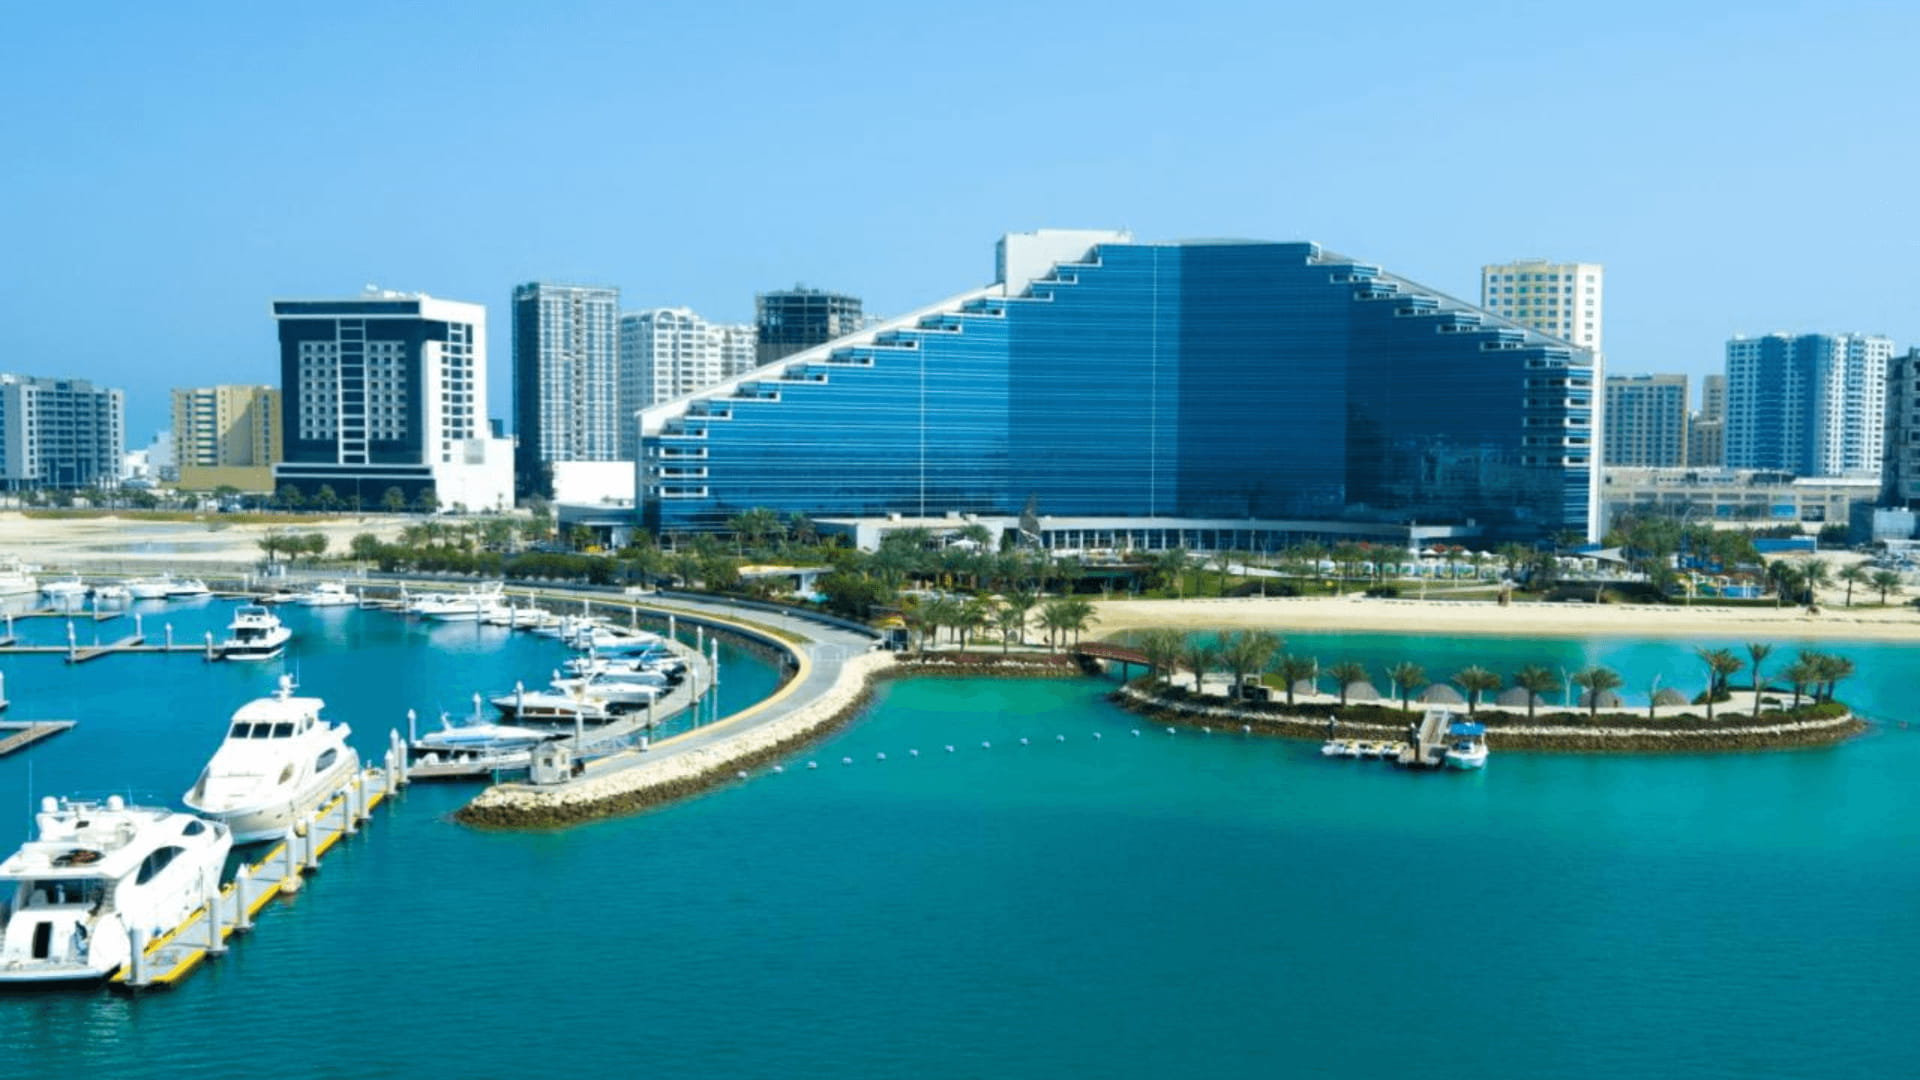 The Art Hotel & Resort Bahrain